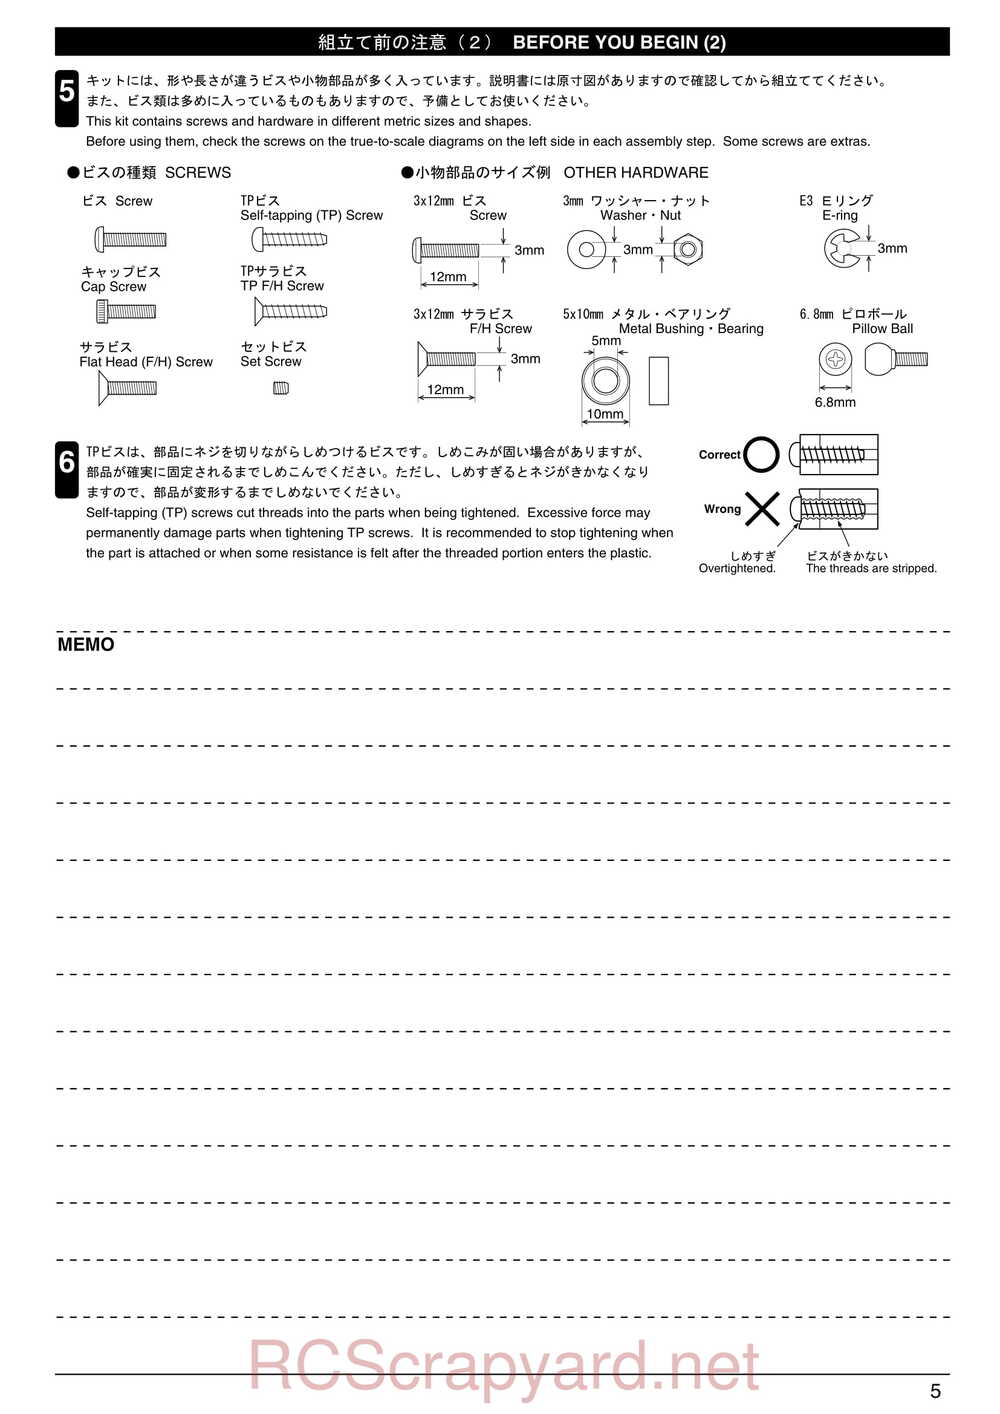 Kyosho - 31271 - Inferno-MP-7-5-Yuichi 2 - Manual - Page 05